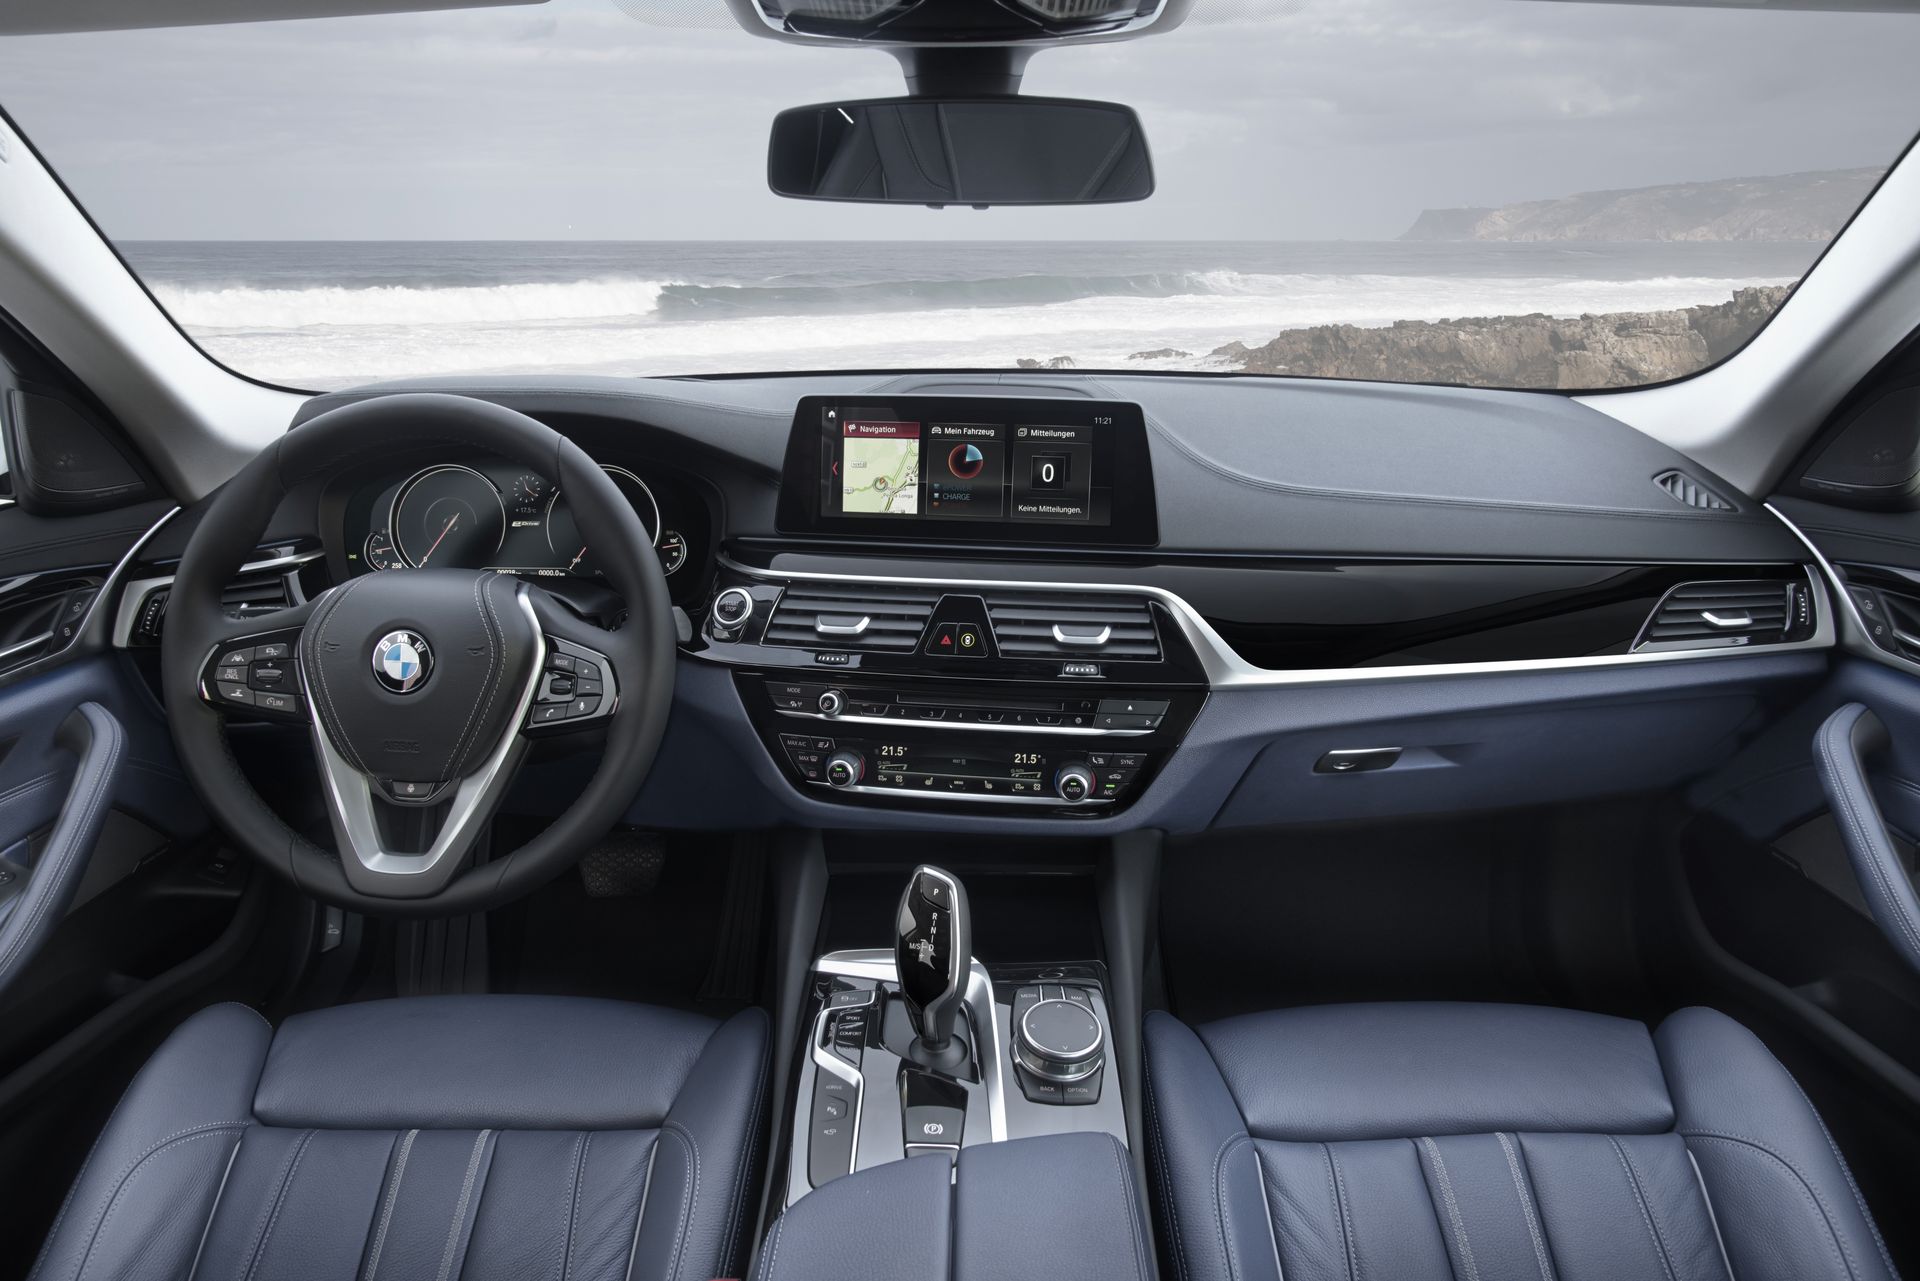 2018 BMW 530e iPerformance PlugIn Hybrid Powertrain Details Revealed